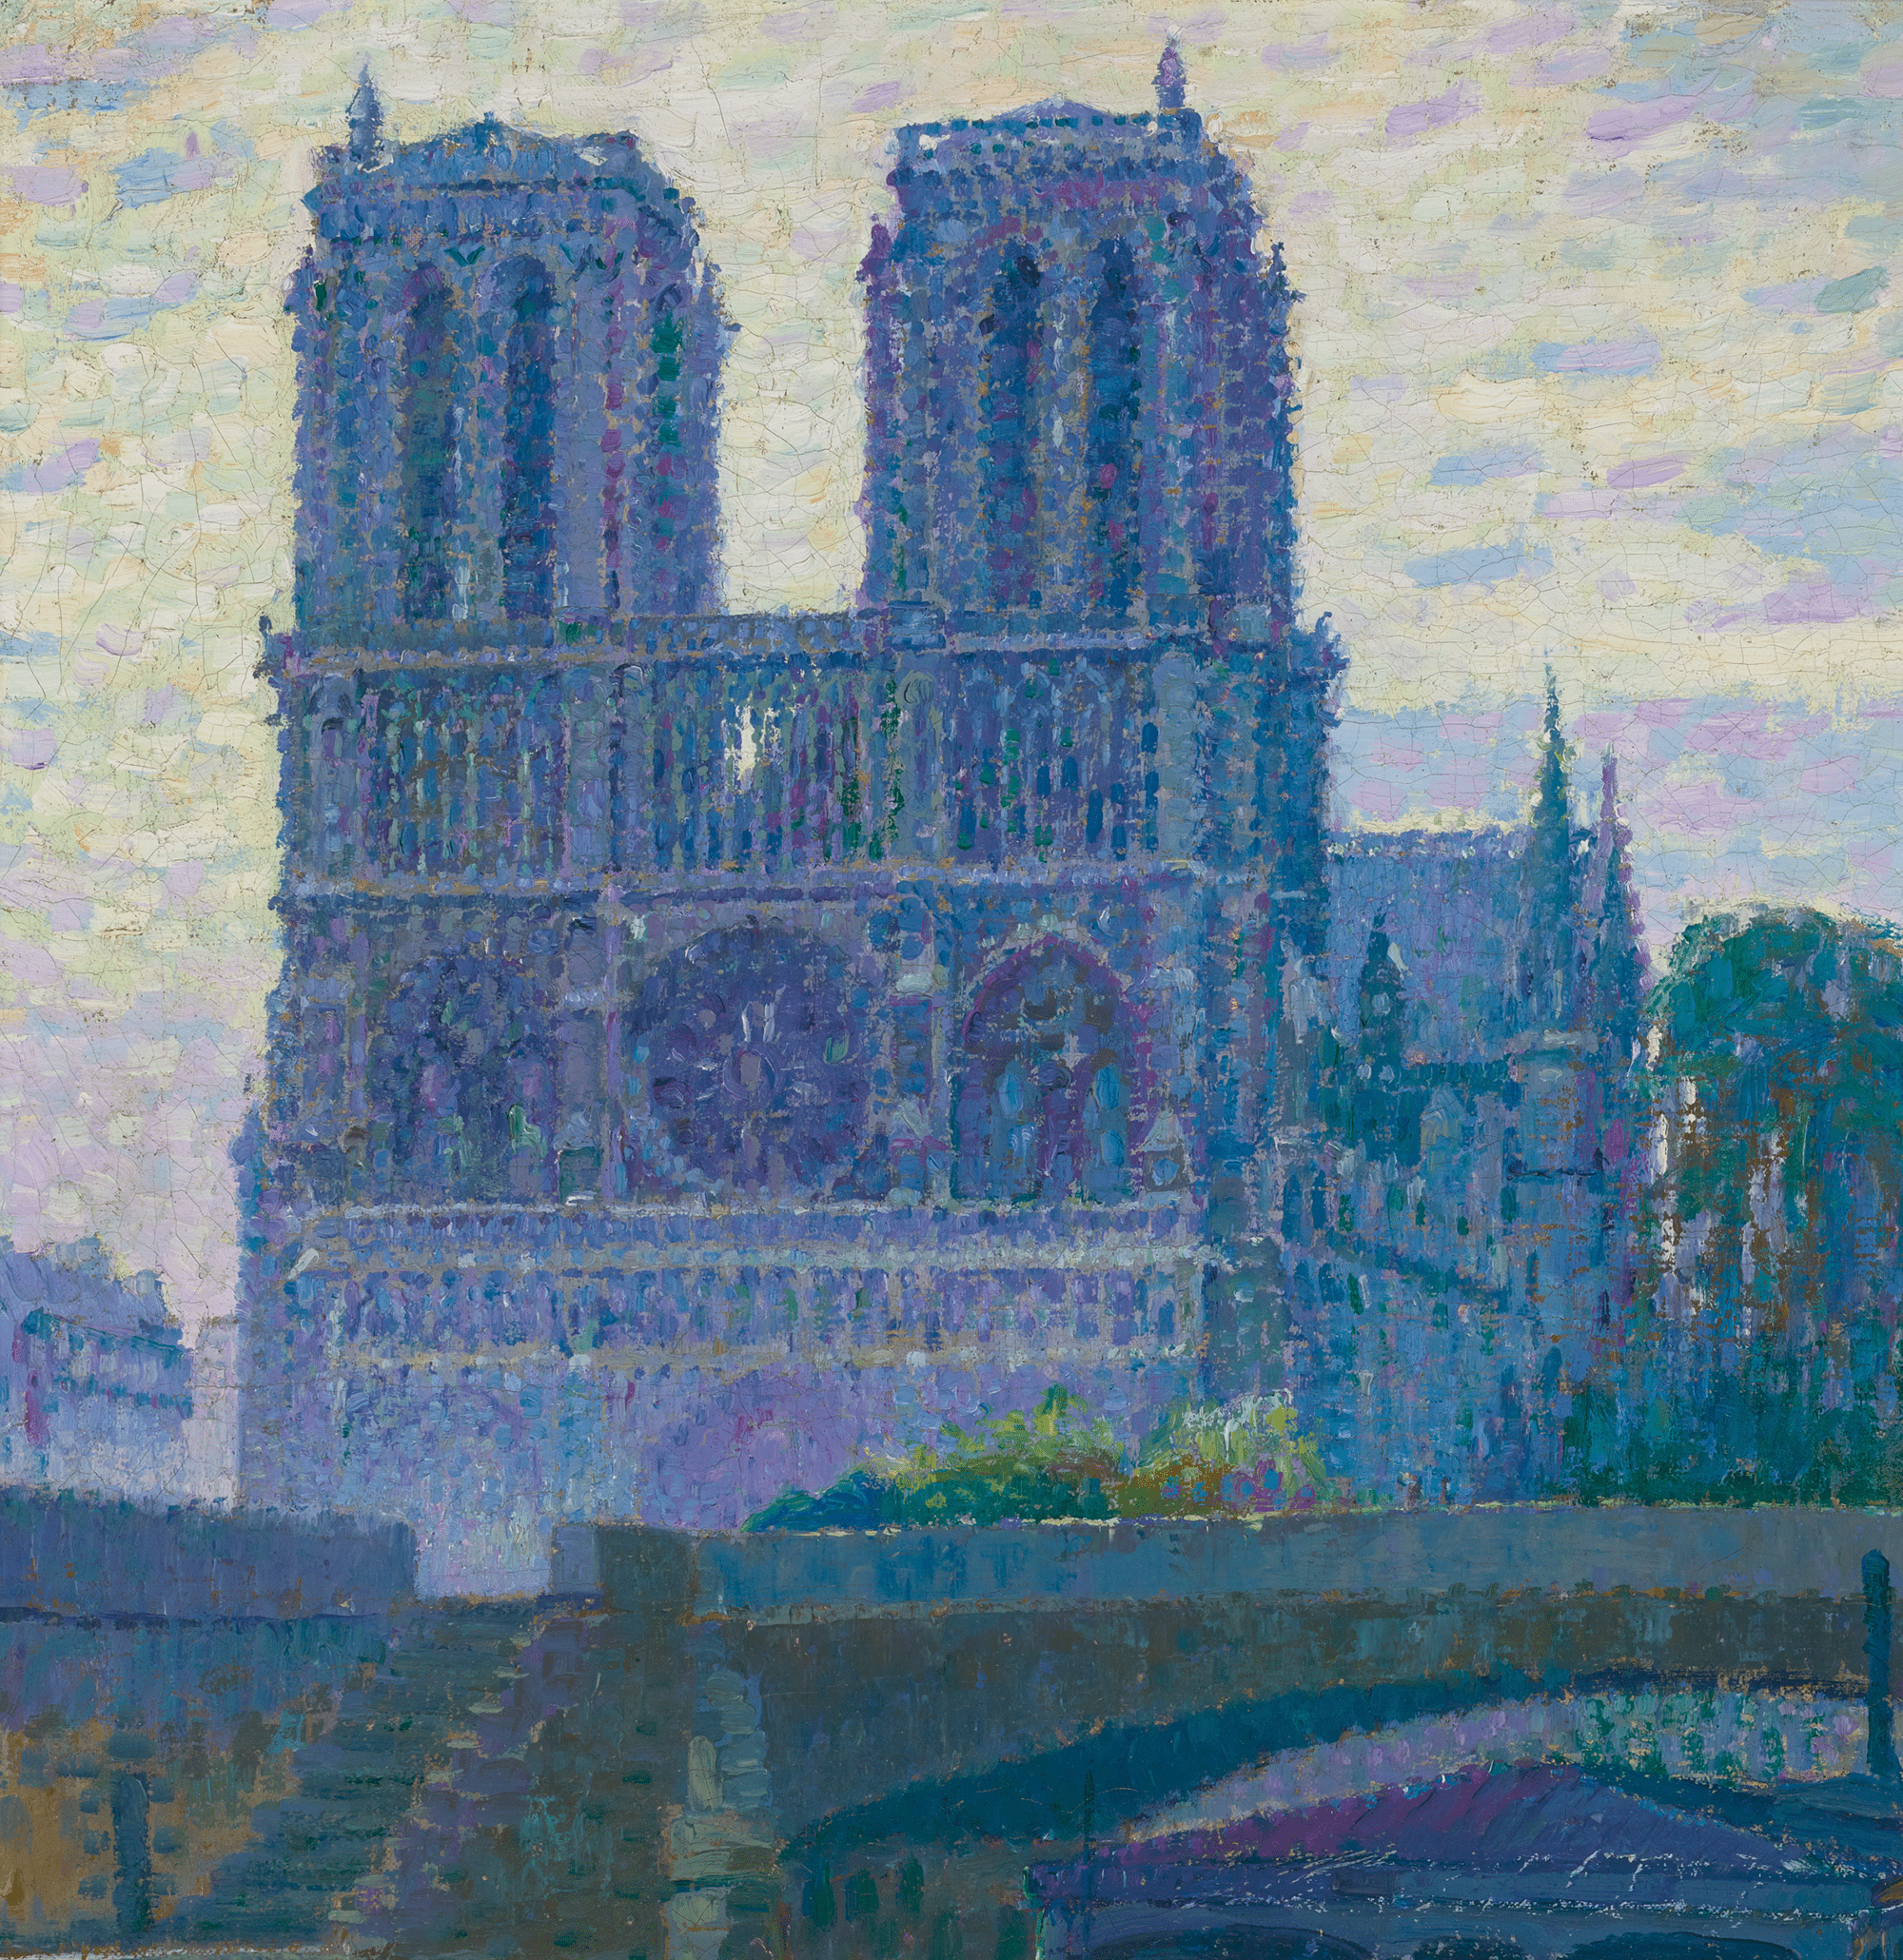 Notre Dame, Paris by Pierre Gaston Rigaud